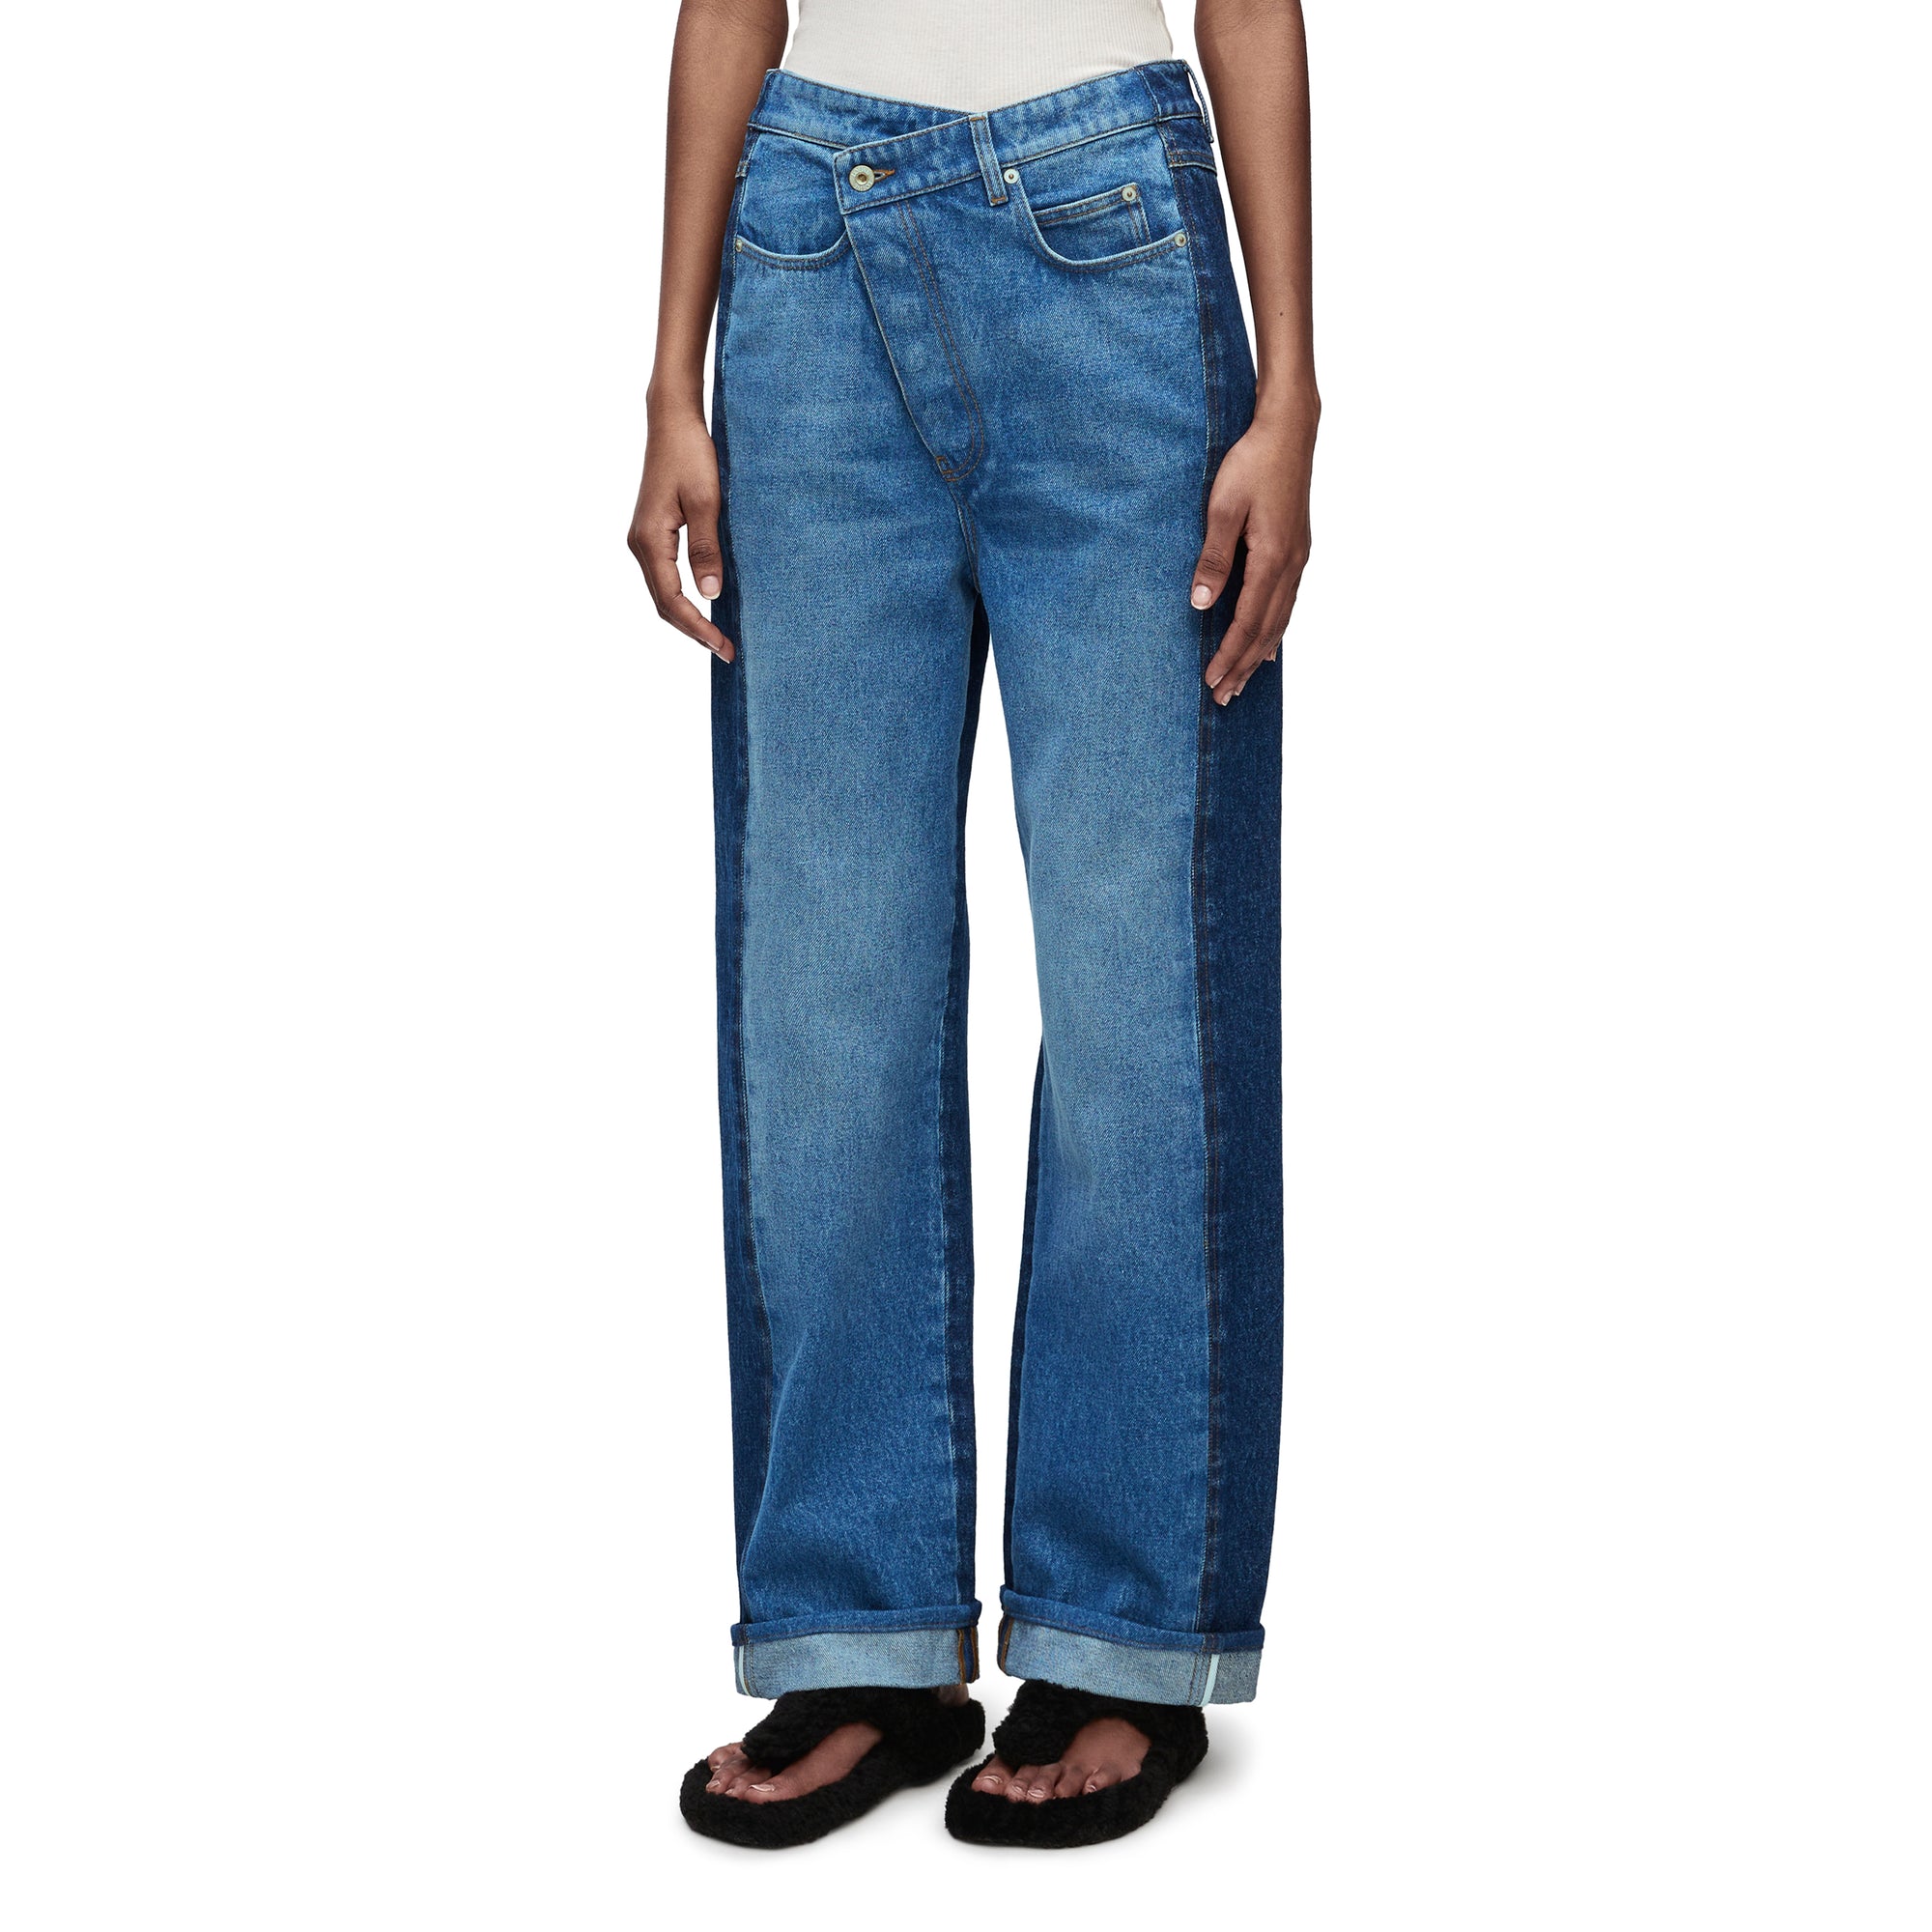 Loewe - Women’s Deconstructed Jeans - (Denim Blue) view 3